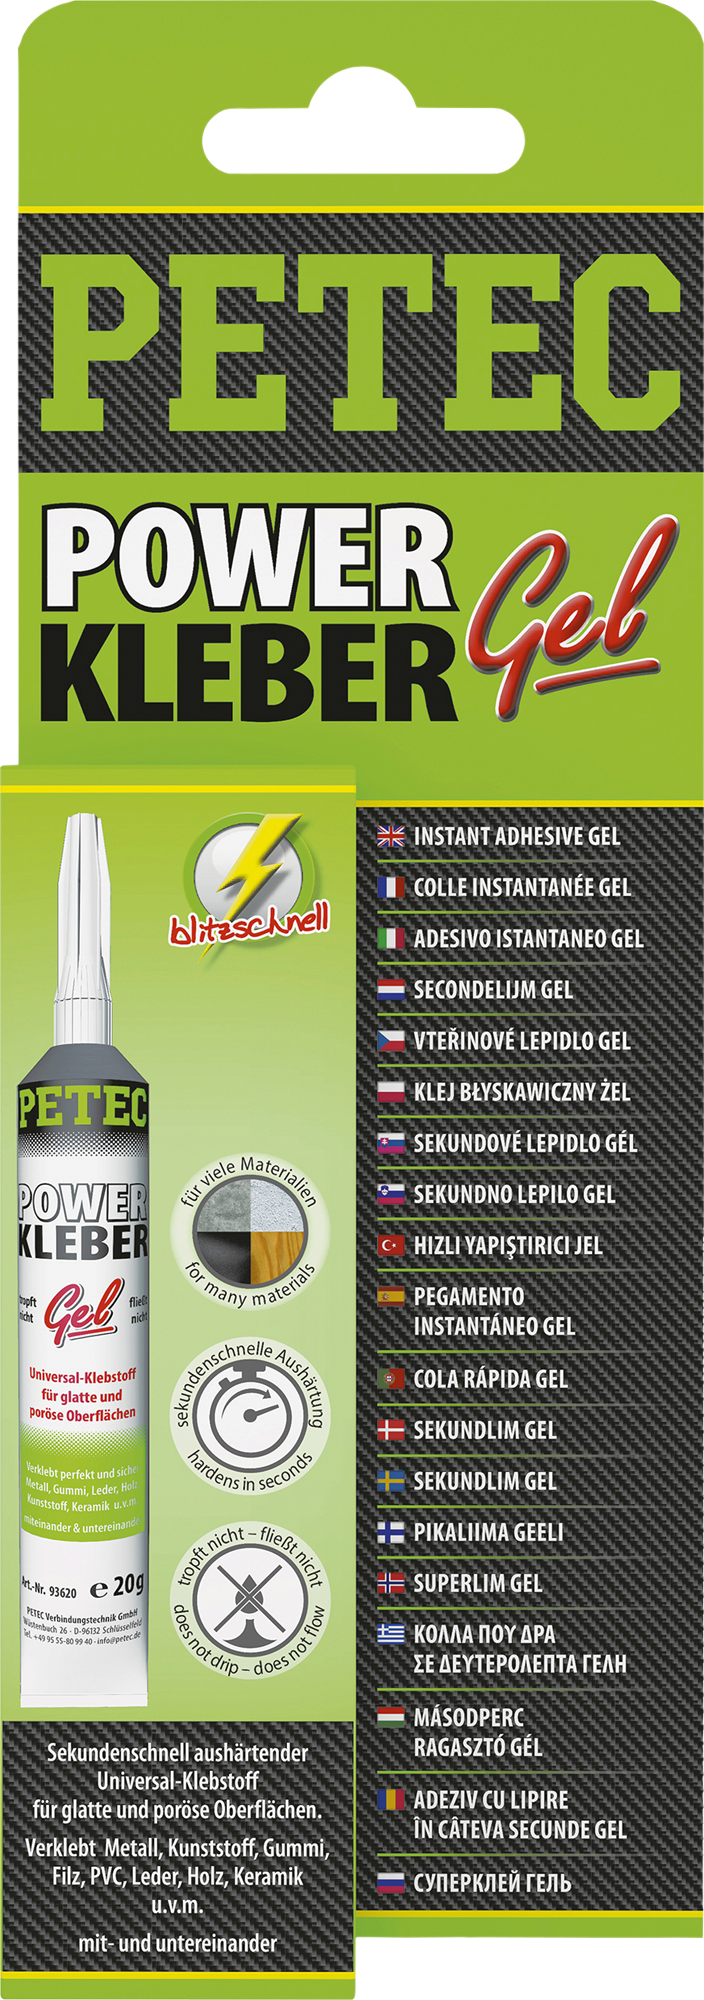 Petec Power Kleber Gel 20 g